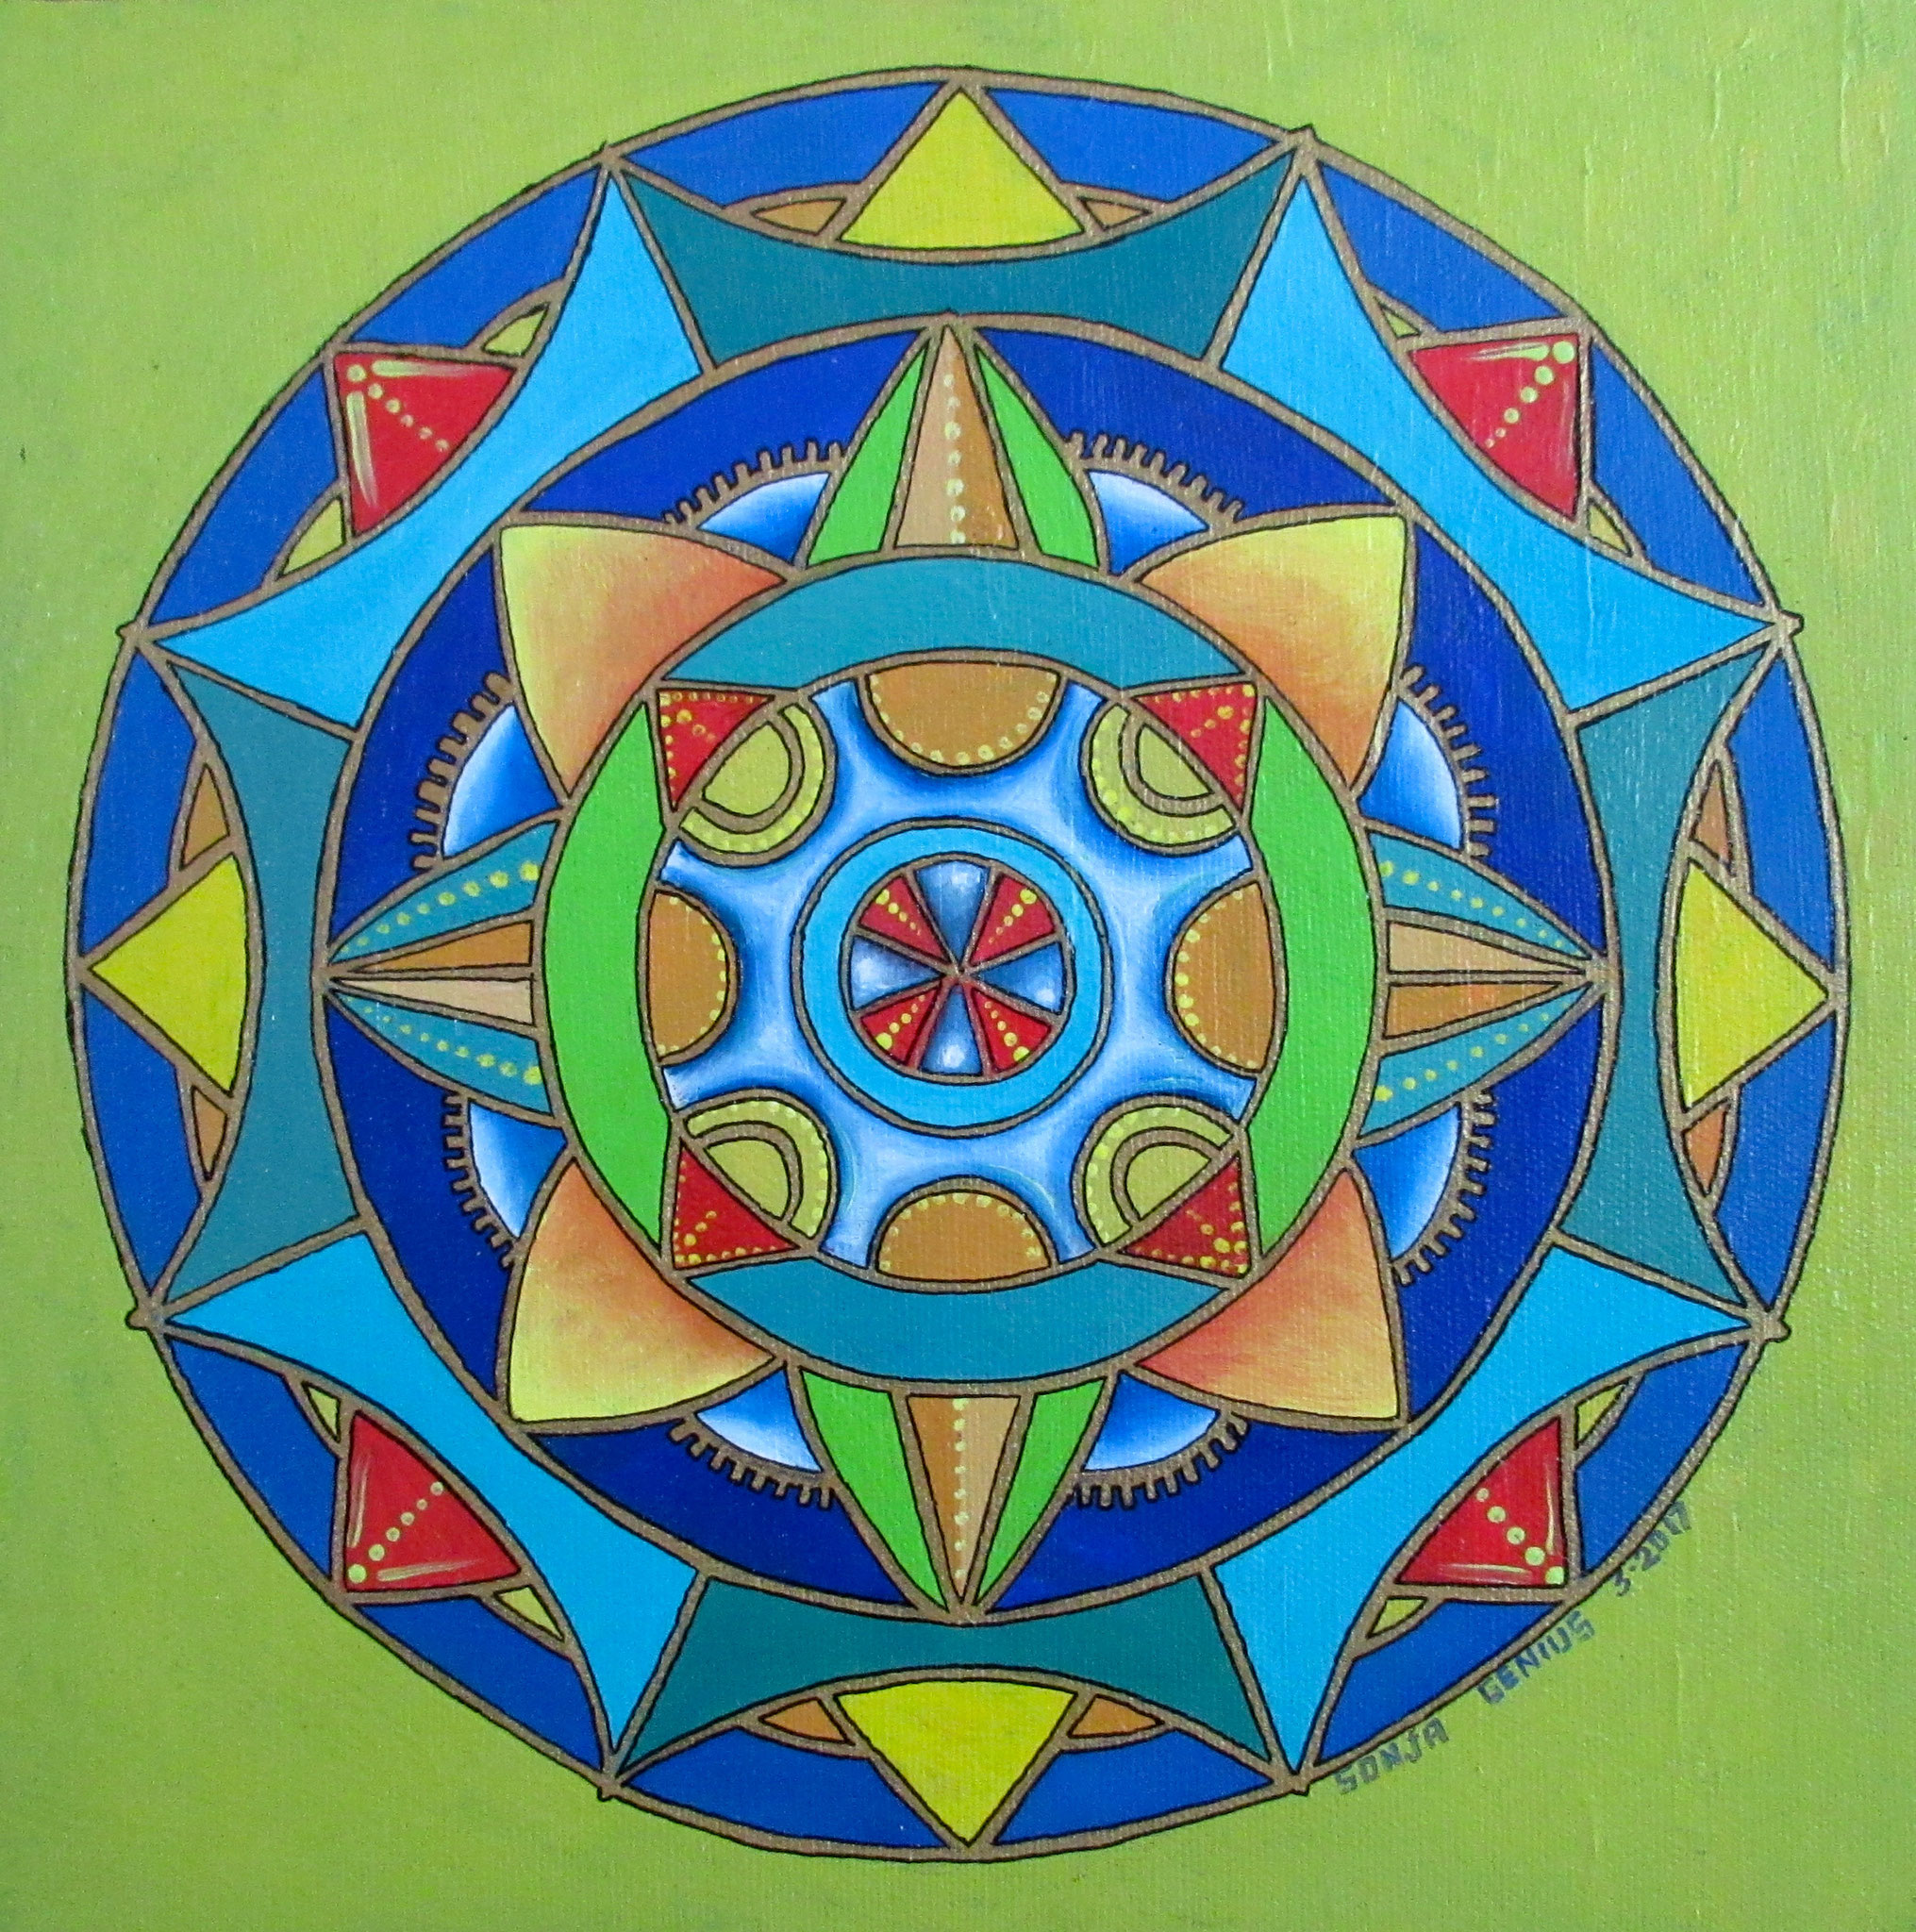  #432 - SOLD 11/20 - Hex Mandala II, oil on canvas 10x10, 3/17 